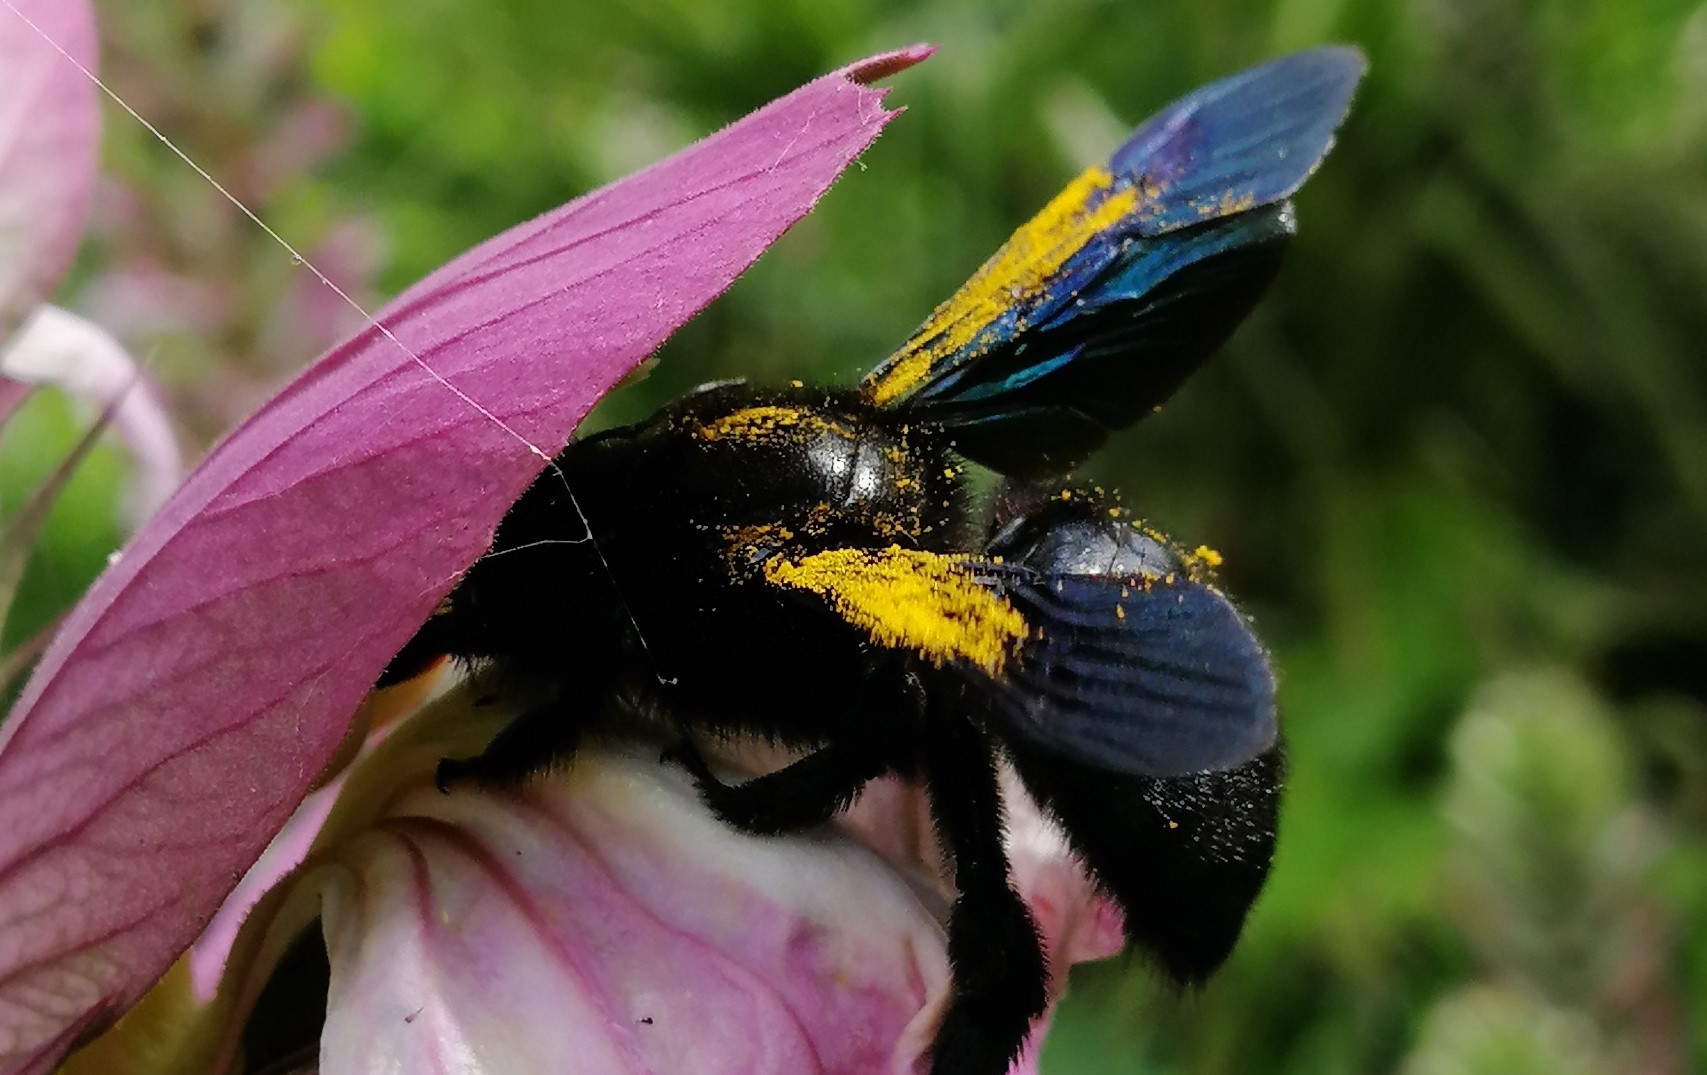 xylocope insecte pollinisateur du jardin